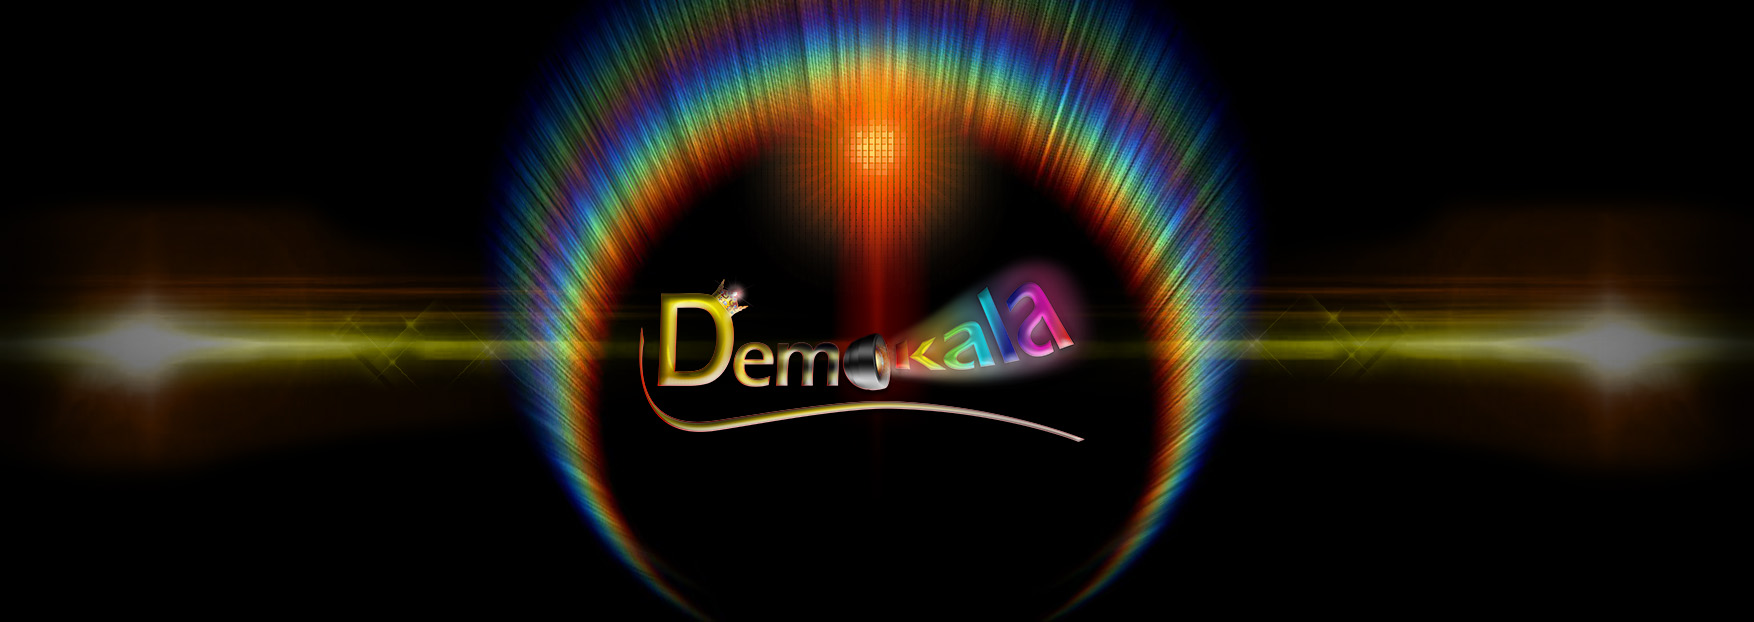 new slider-demokala-دموکالا-لایتینگ-تکنولوژی های نوین